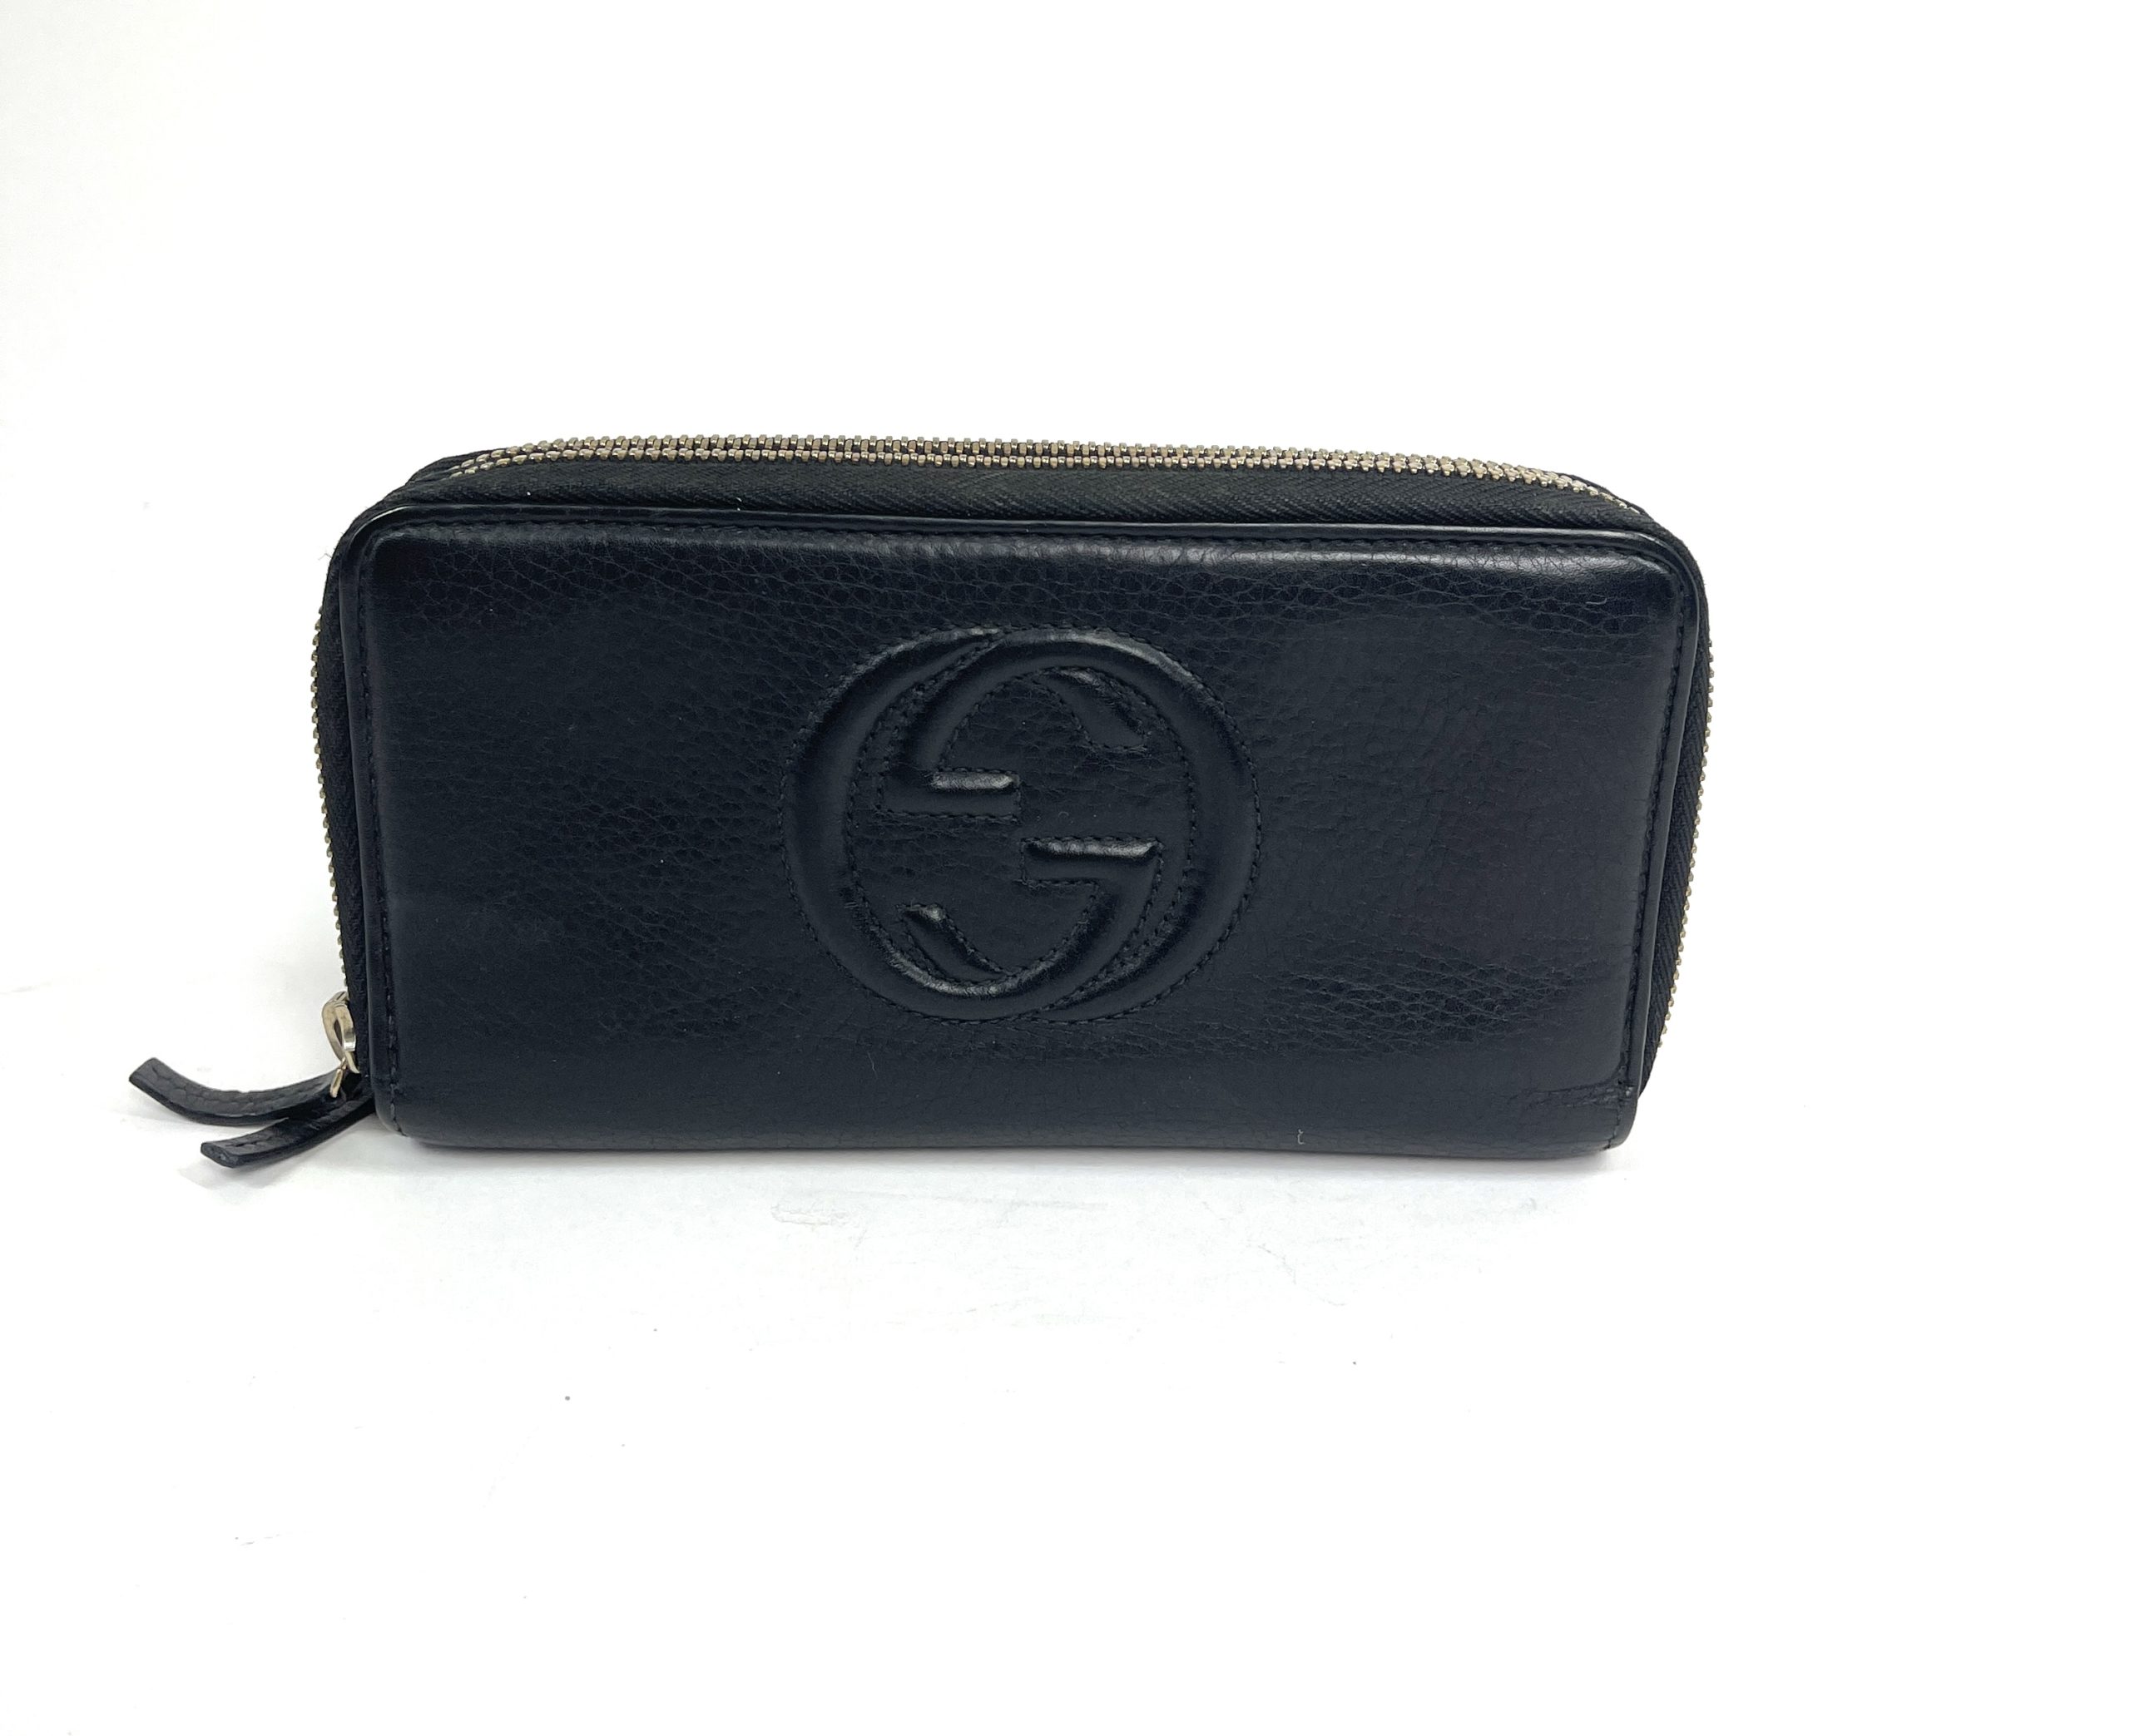 Gucci Soho Black Cellarius GG Logo Leather Chain Bag 